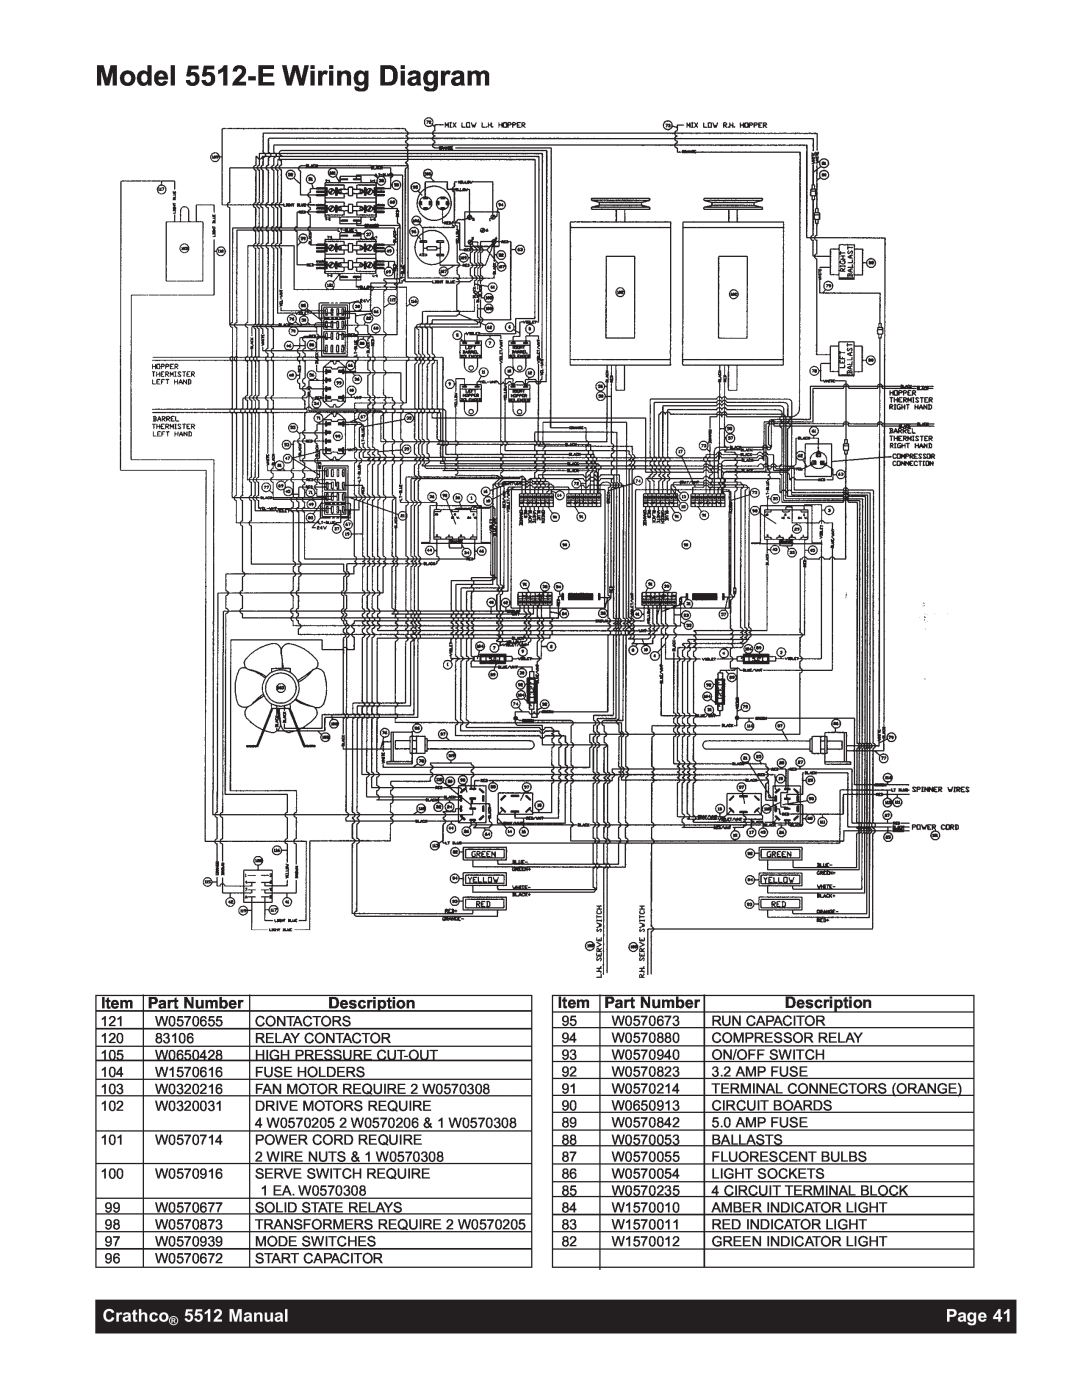 Grindmaster 5512E instruction manual Model 5512-E Wiring Diagram, Crathco 5512 Manual, Page 